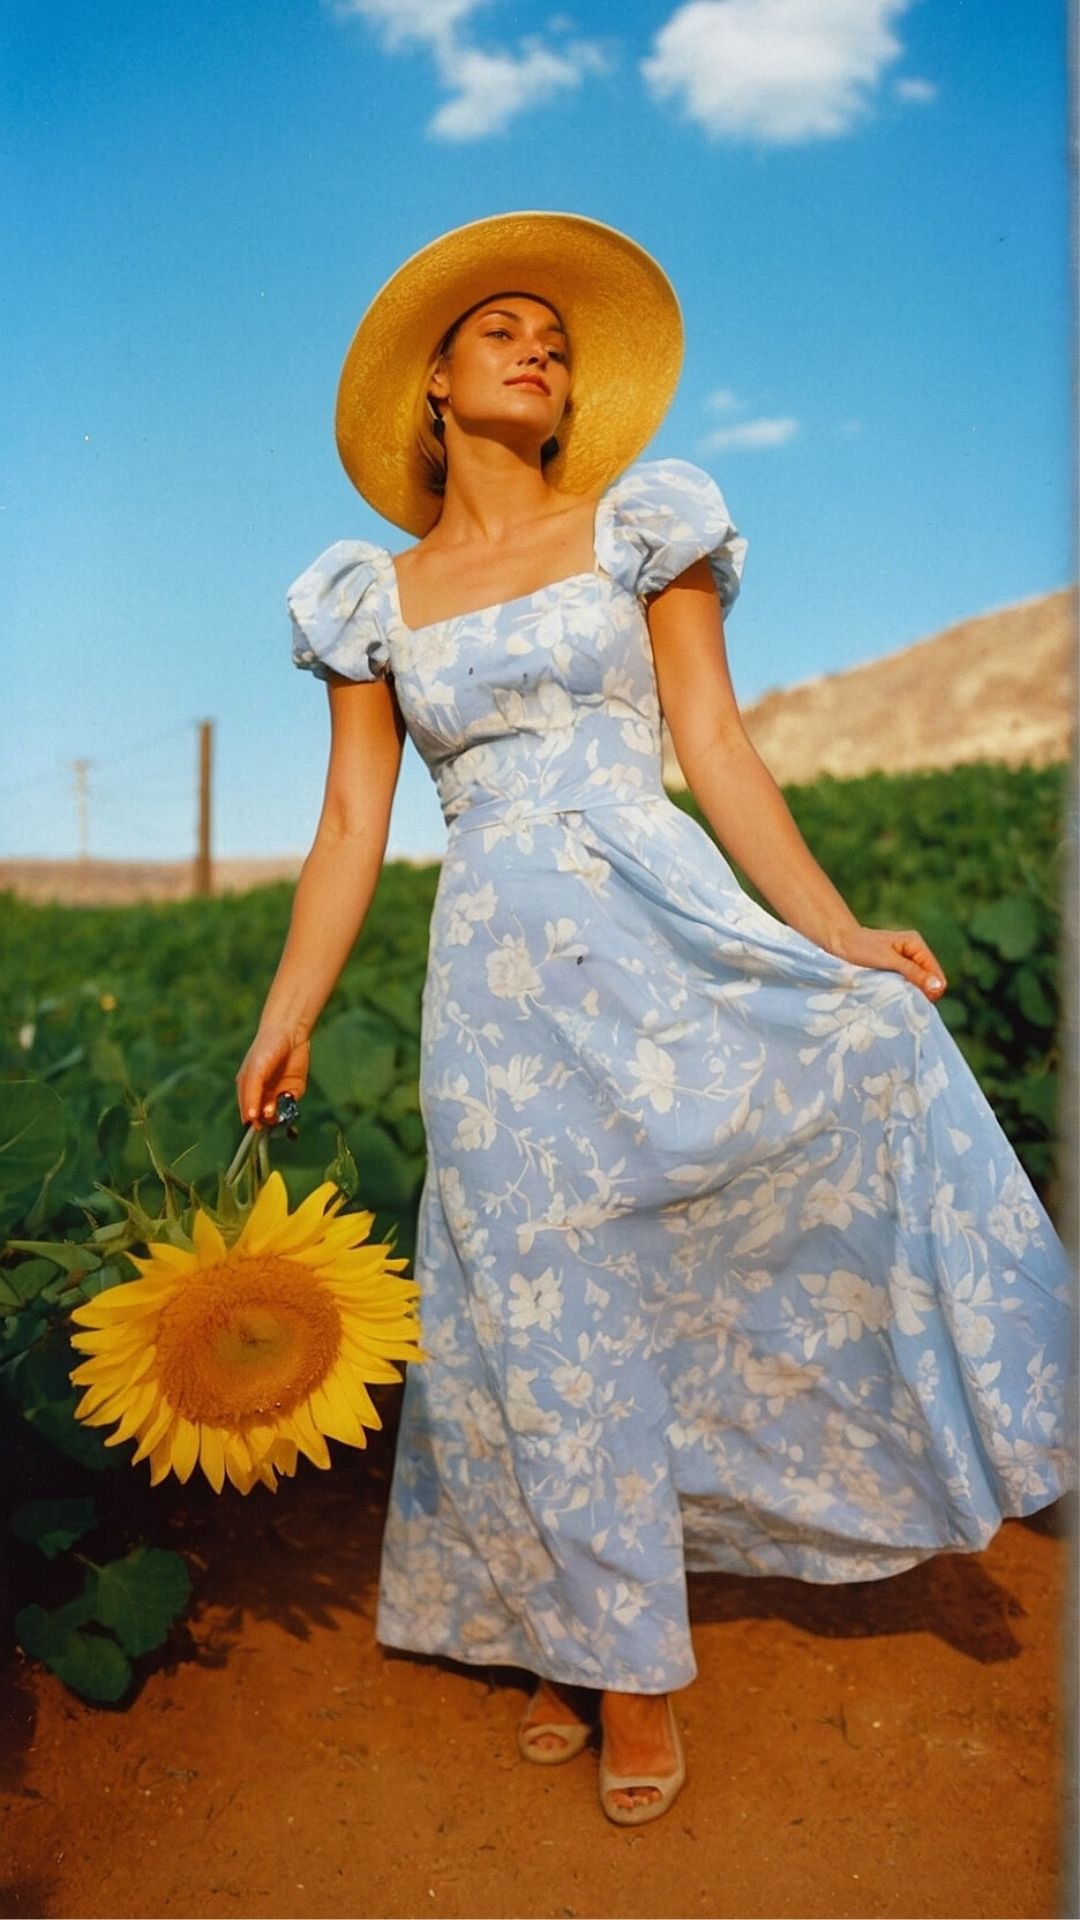 Sunflower Serenity: Summer Dress and Straw Hat Wallpaper